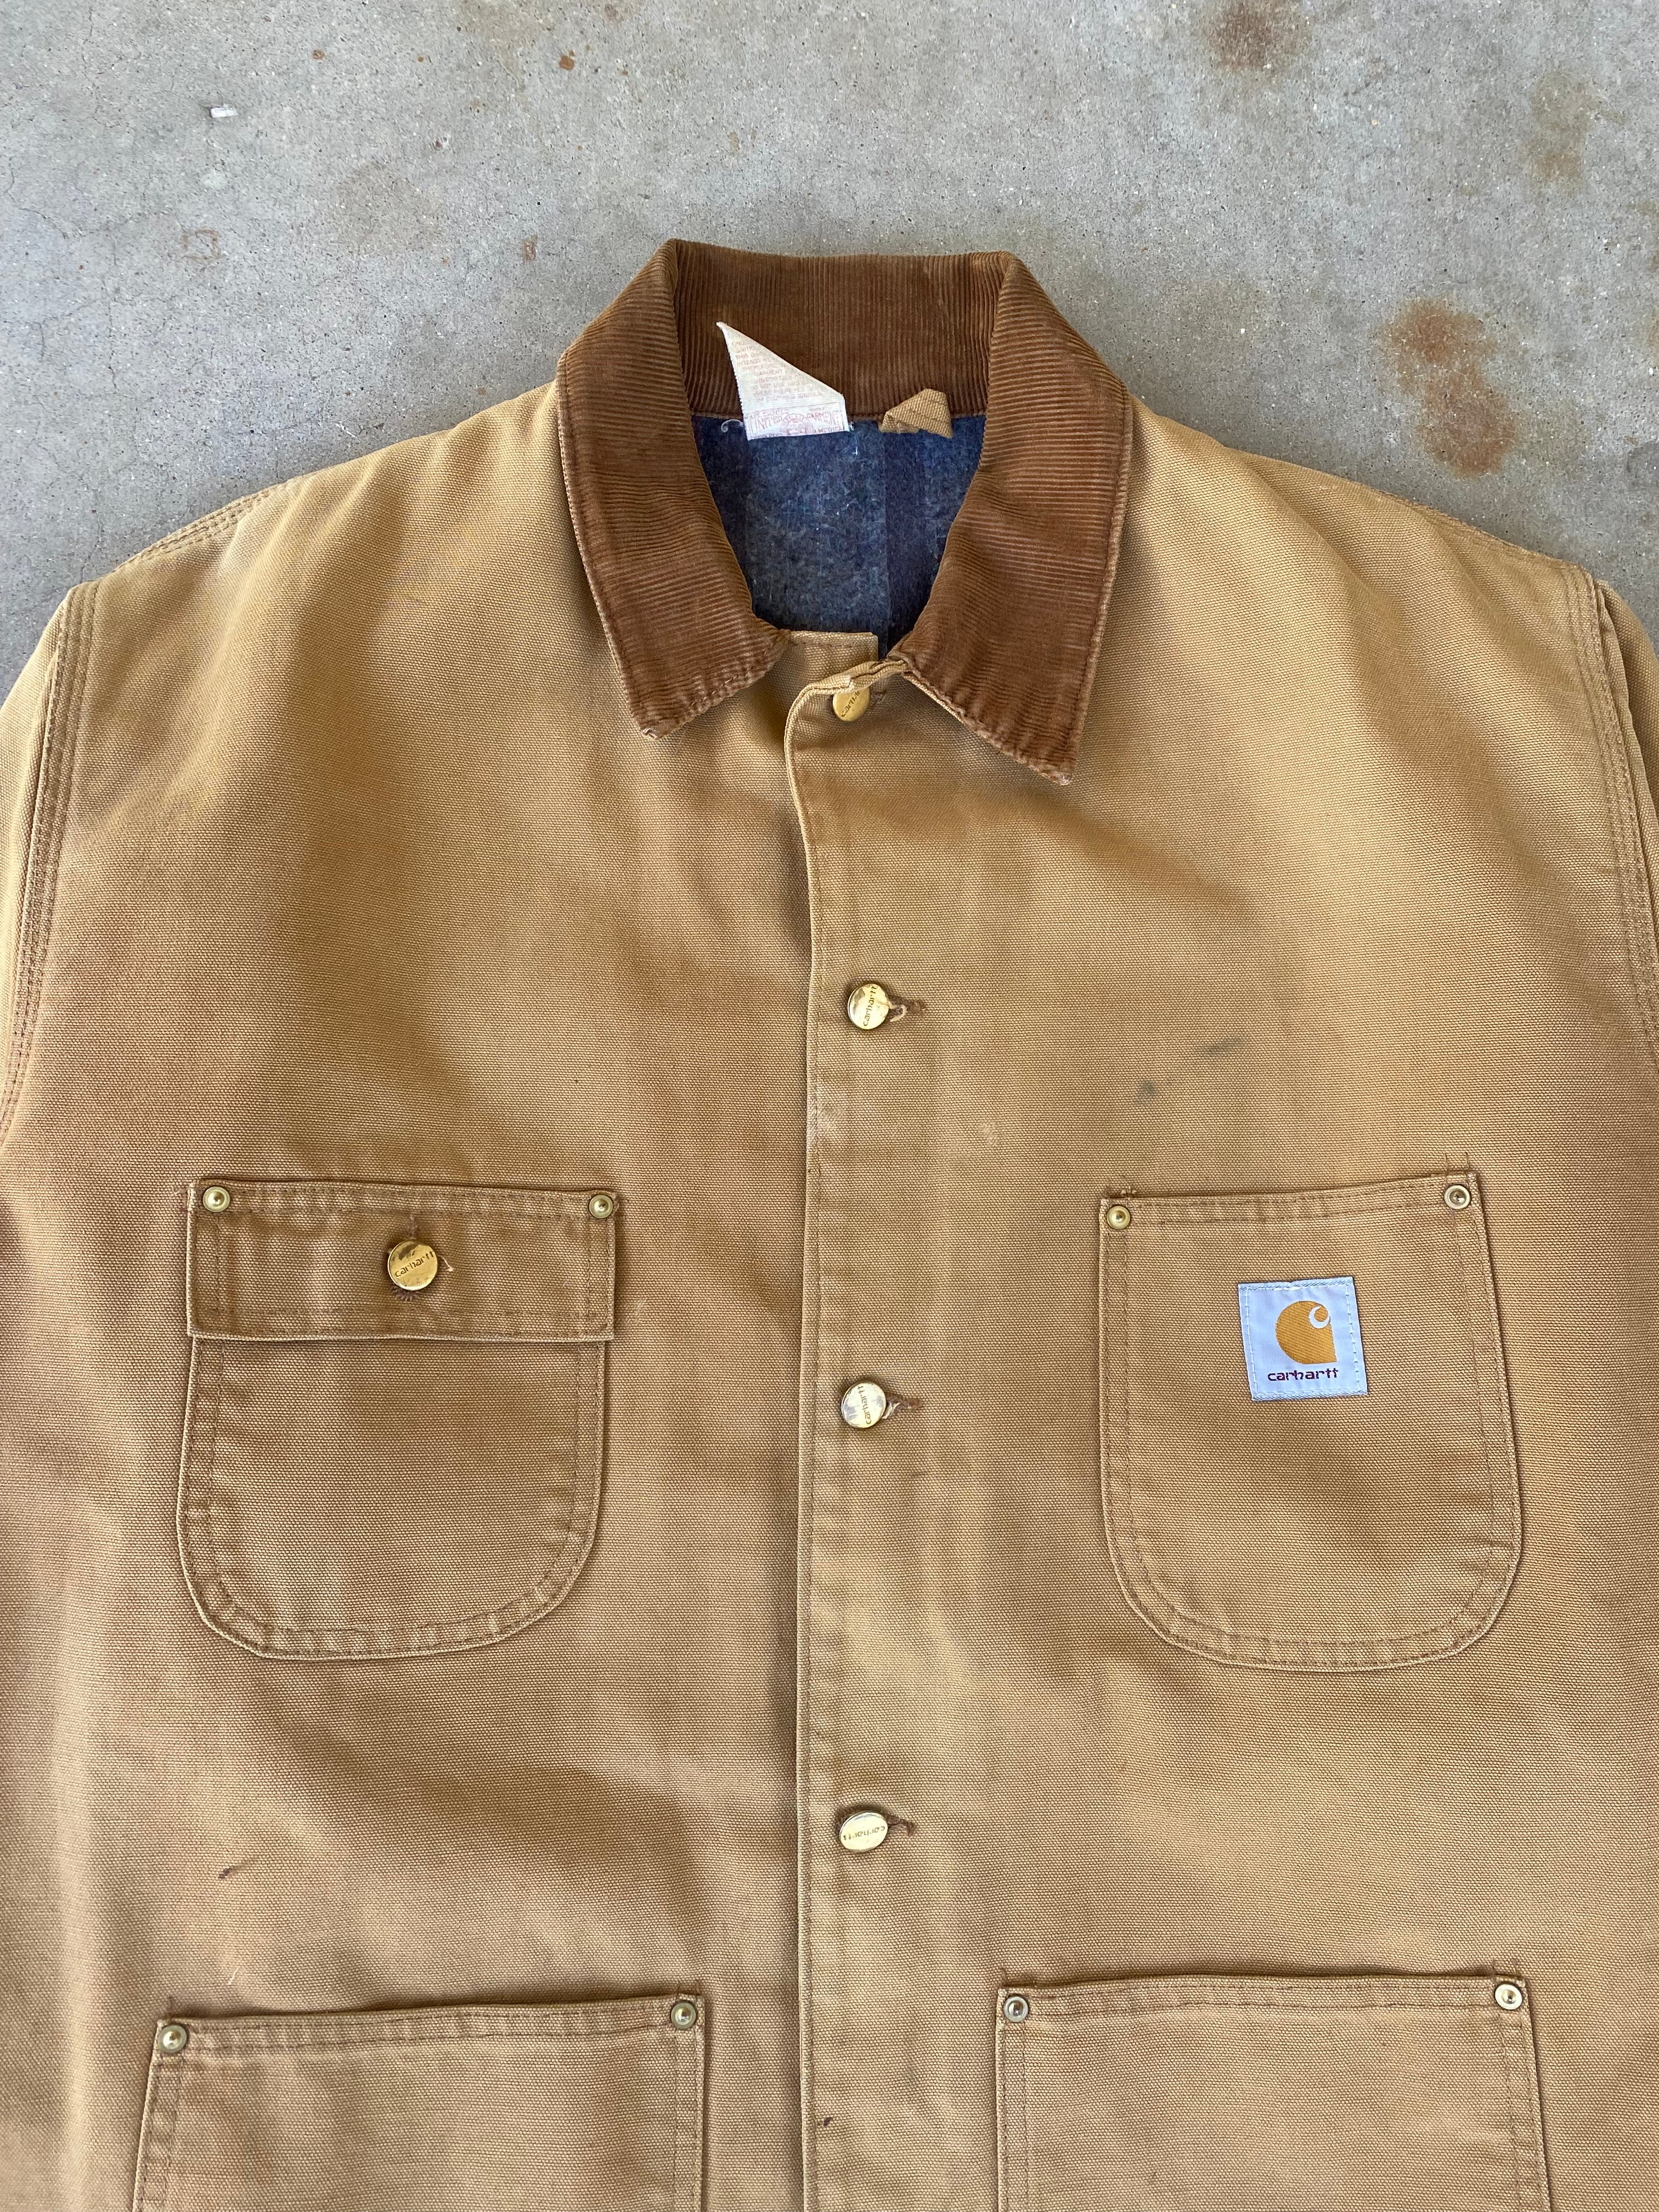 1980s Carhartt Tan Blanket Lined Chore Jacket (XL)